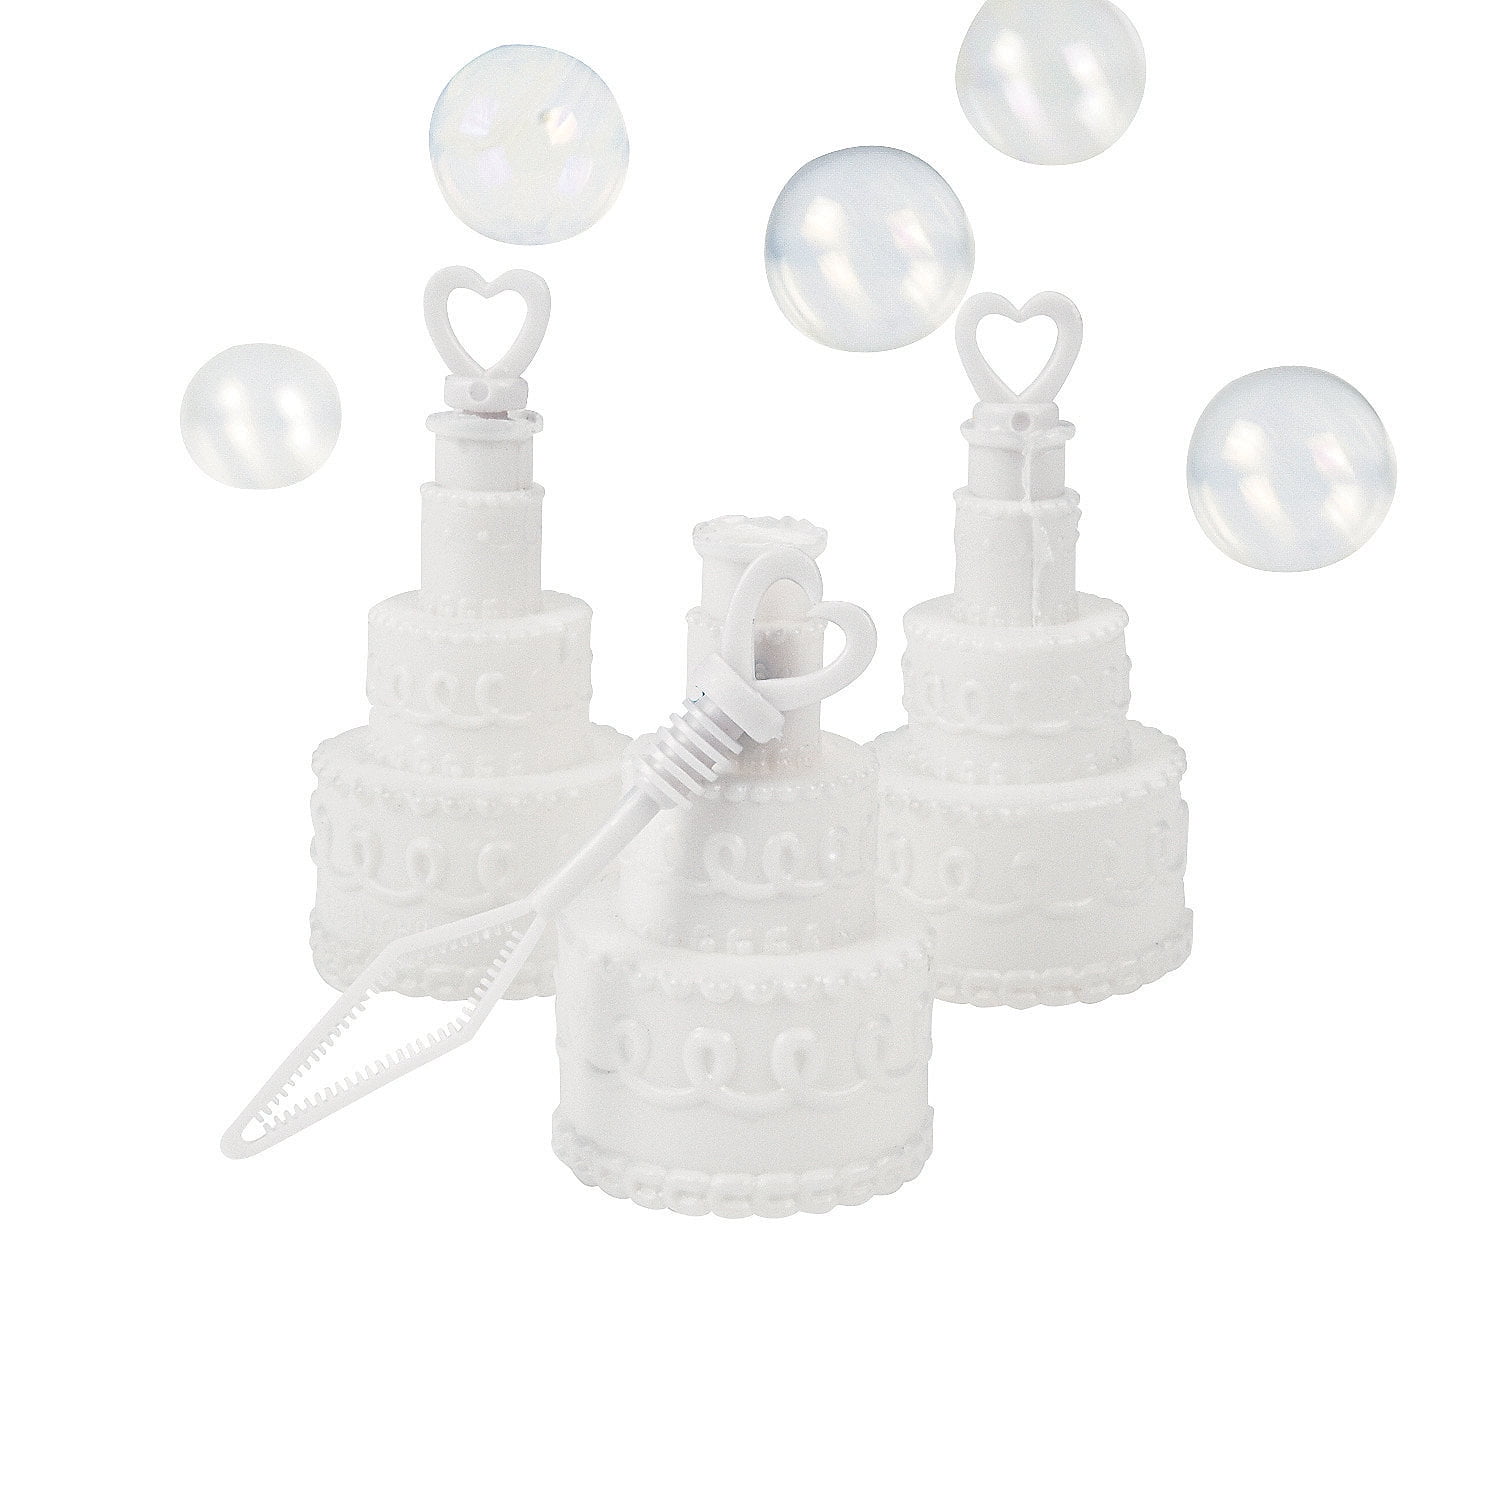 48 x White Wedding Heart Cake Bubbles Table Decorations Reception Favours X50005 